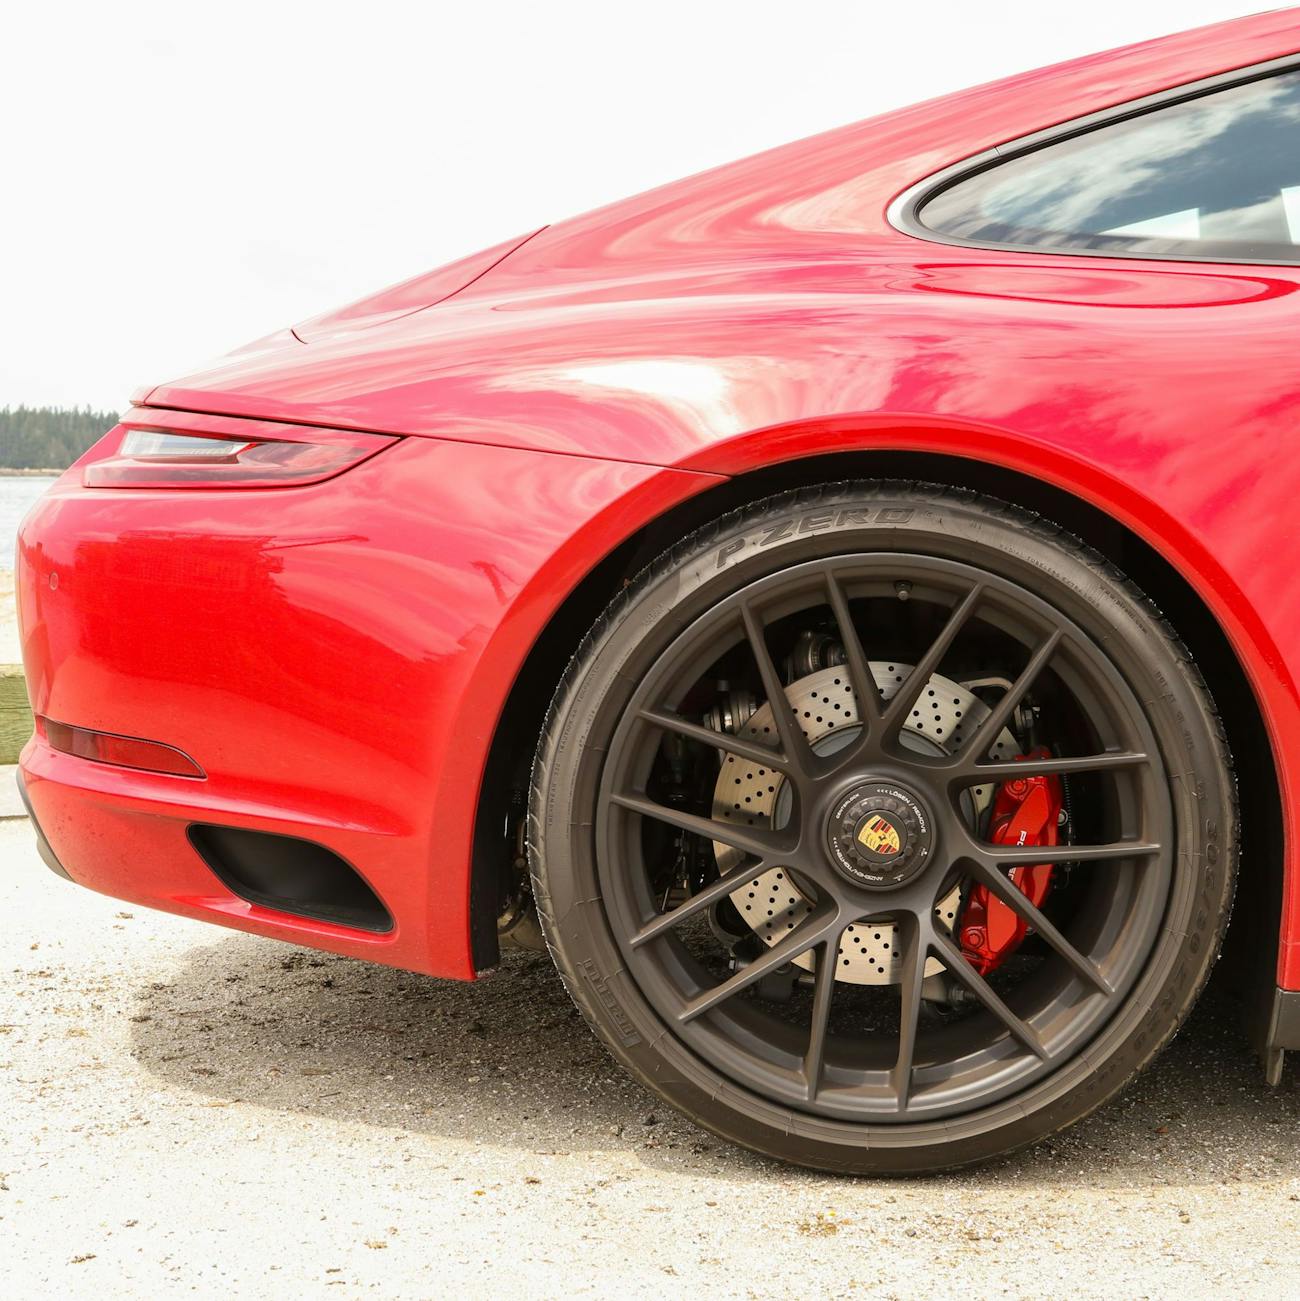 Carmine Red Porsche 911 Carrera 4 GTS side rear view